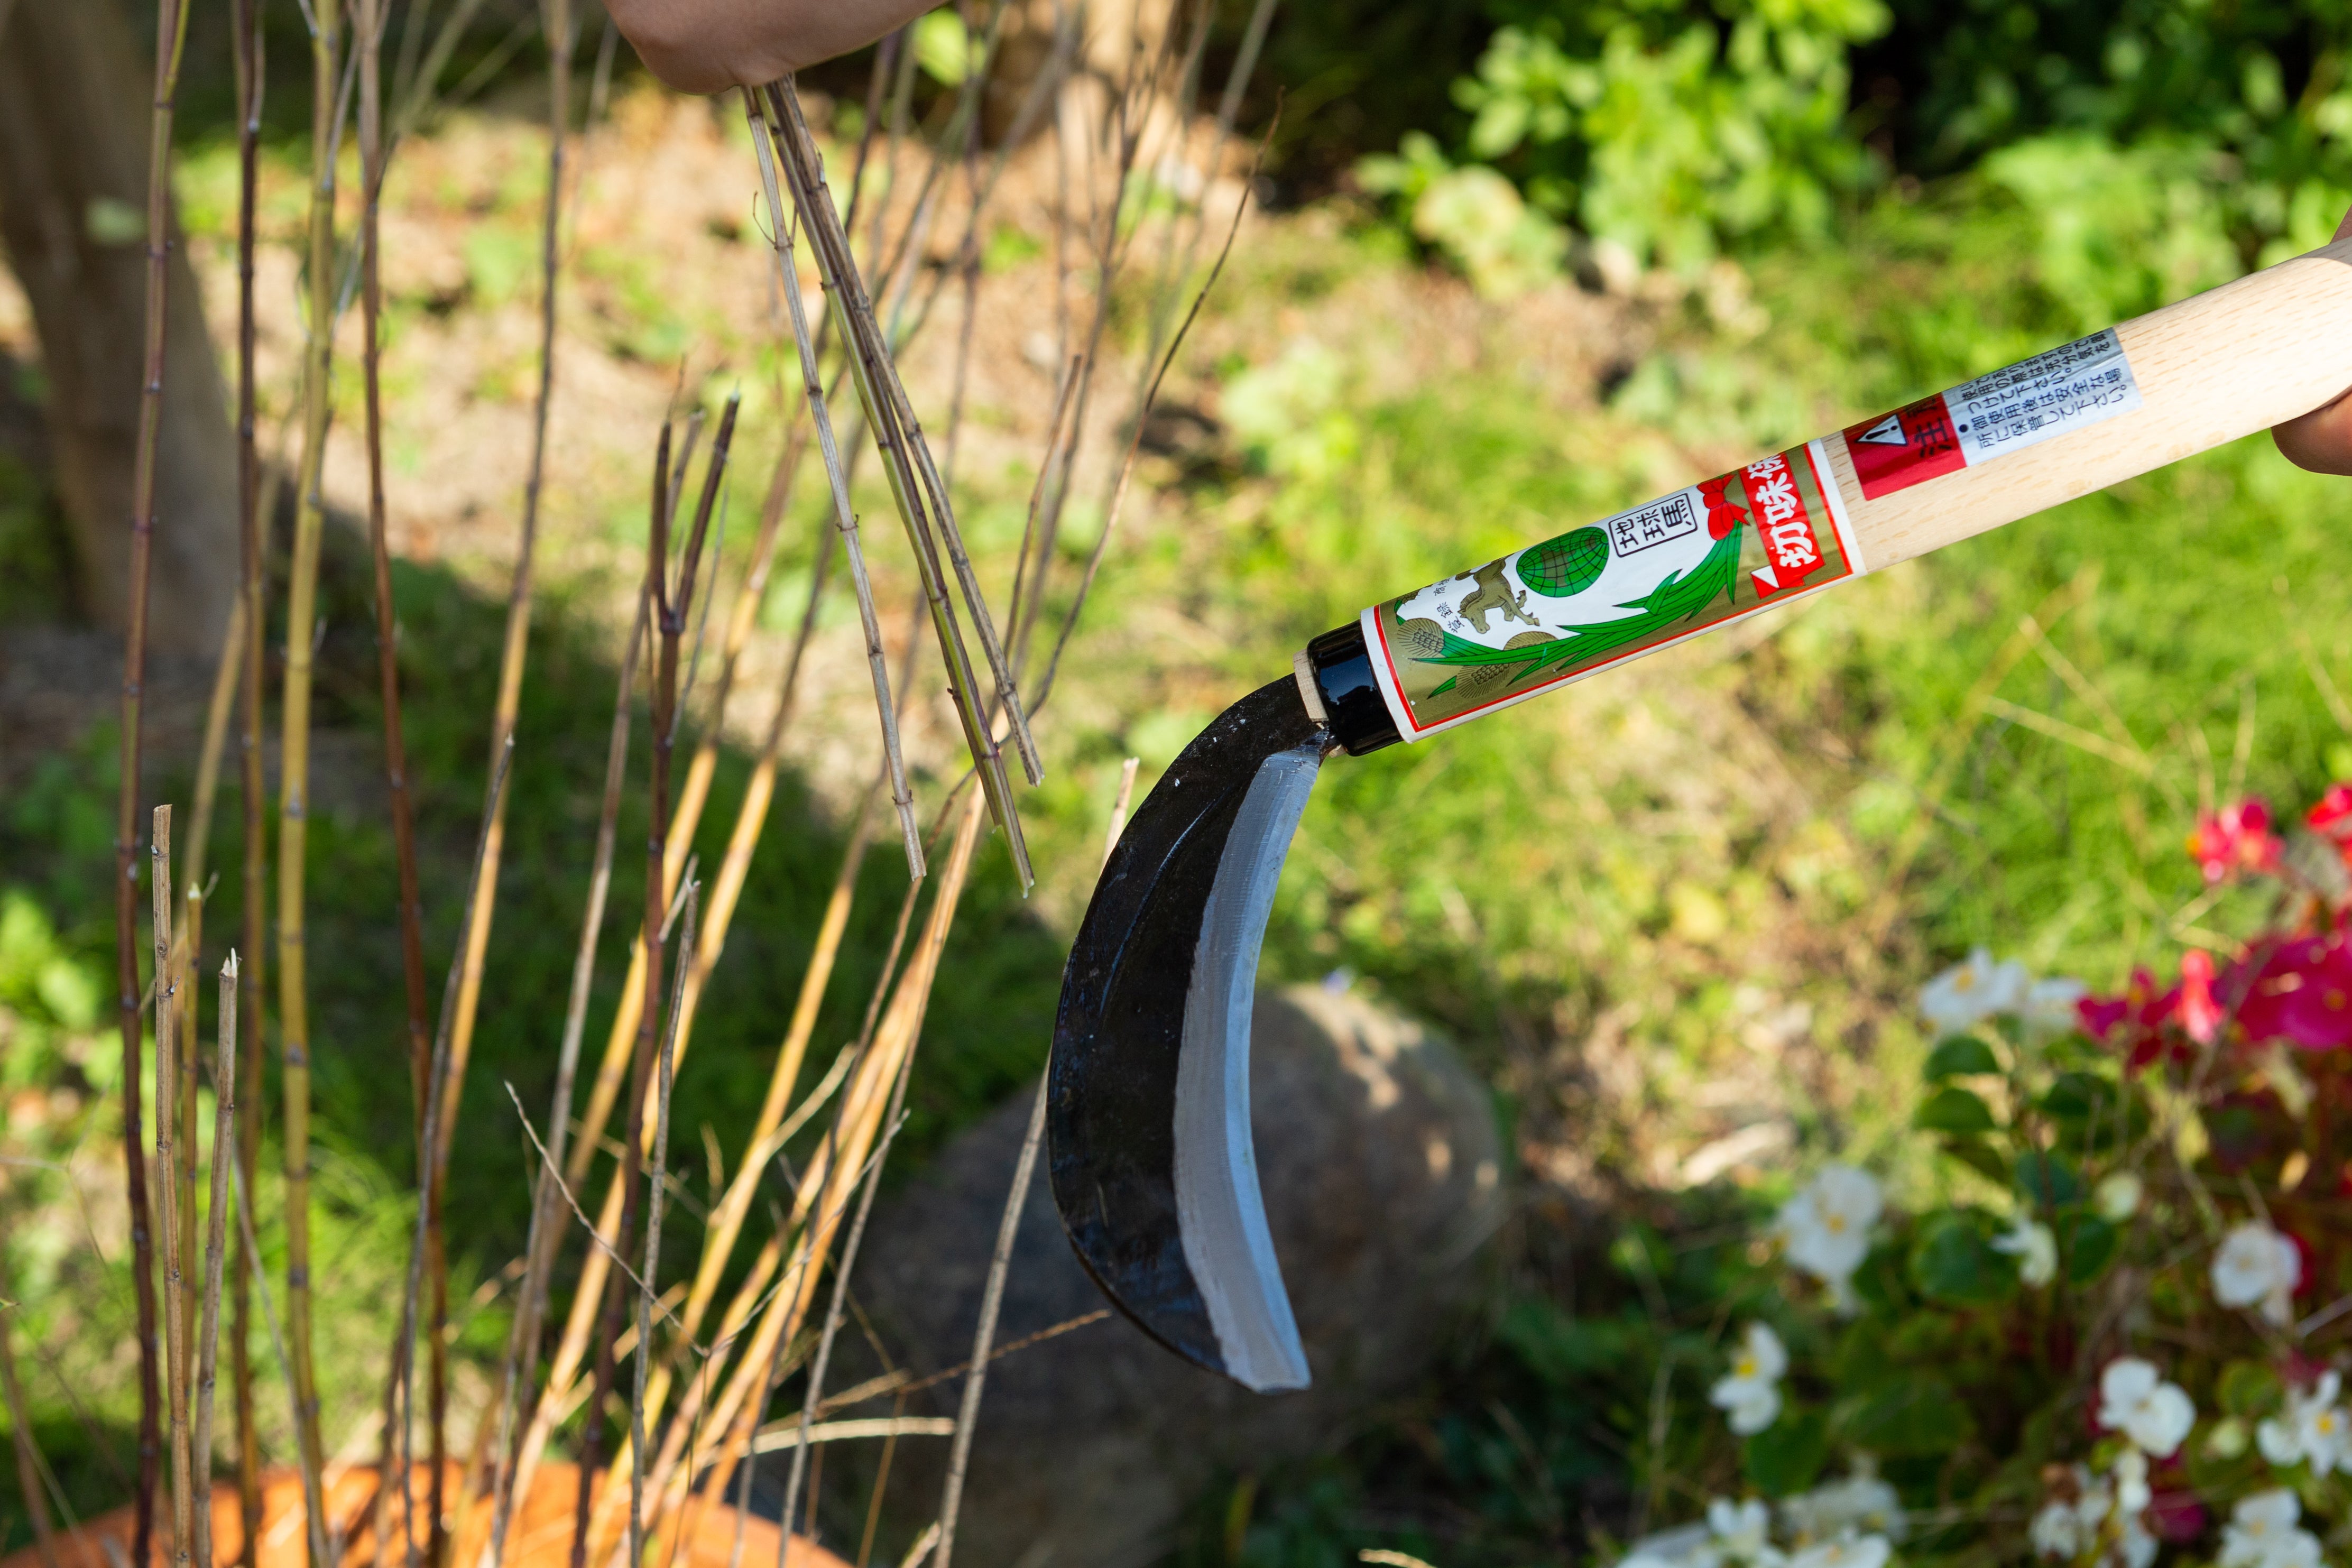 Chikyuma Japanese Weeding Sickle (Thick Blade) - Japanese Gardening Tools